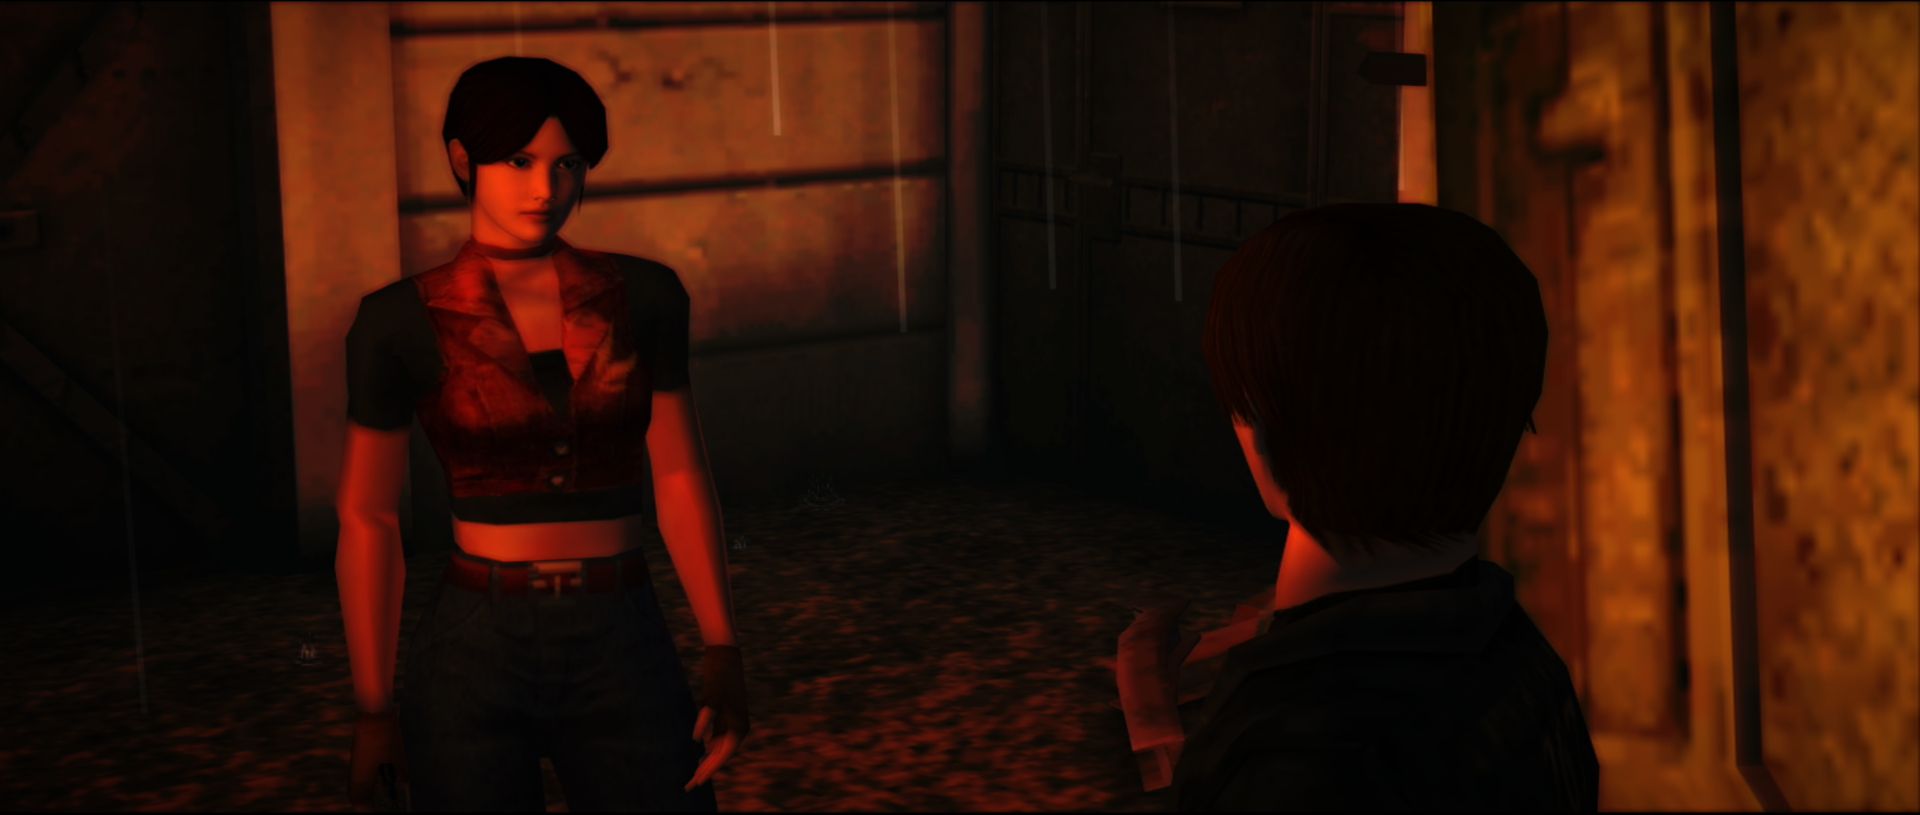 Resident Evil 4 Separate Ways by bartgru89 on DeviantArt